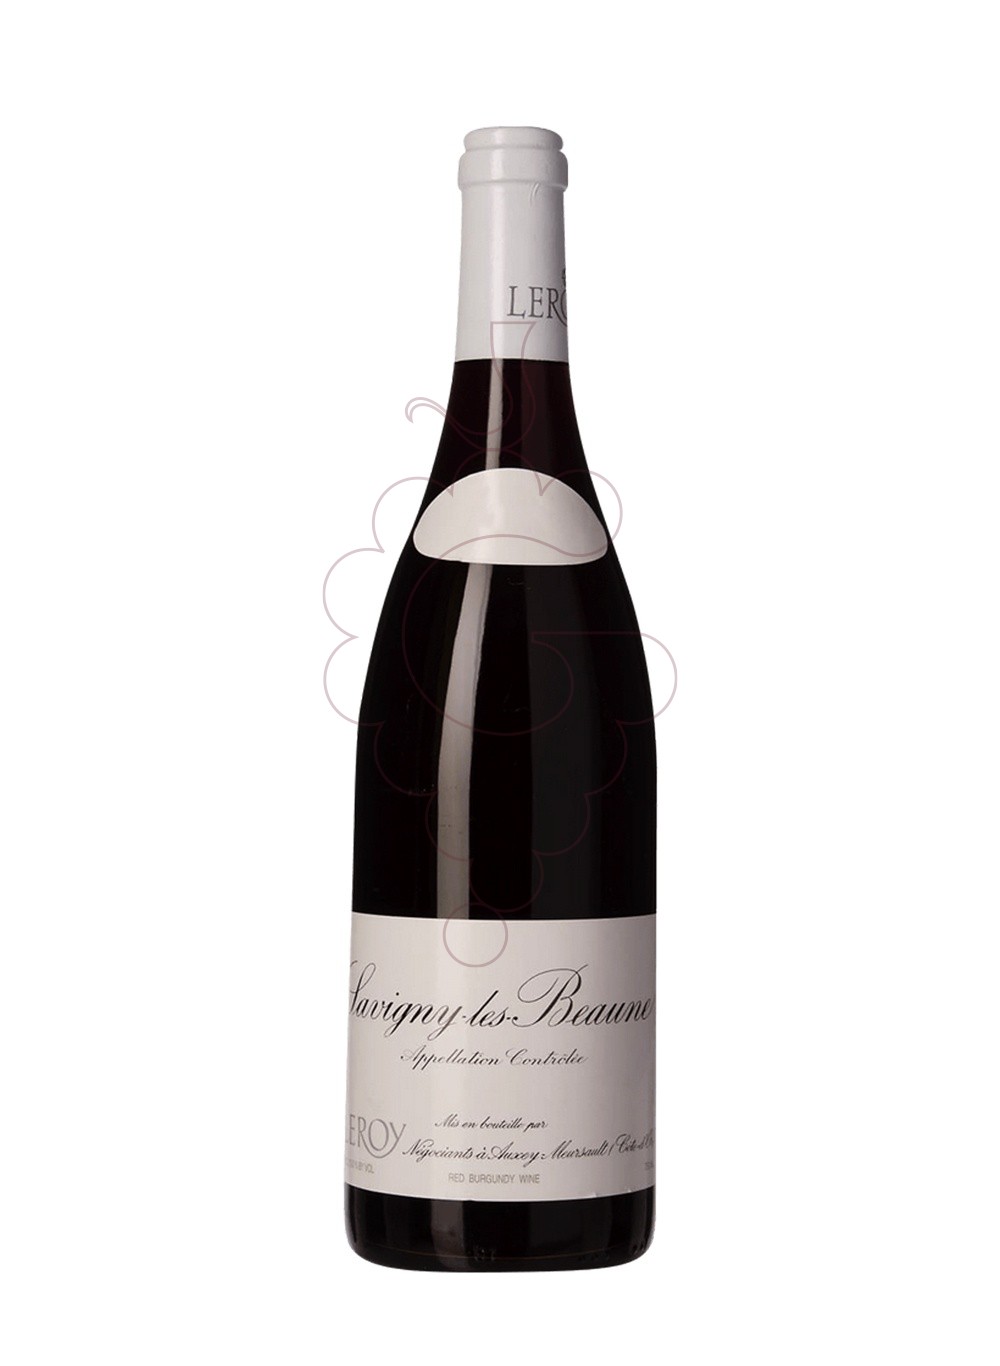 Foto Leroy Savigny-lès-Beaune vino tinto